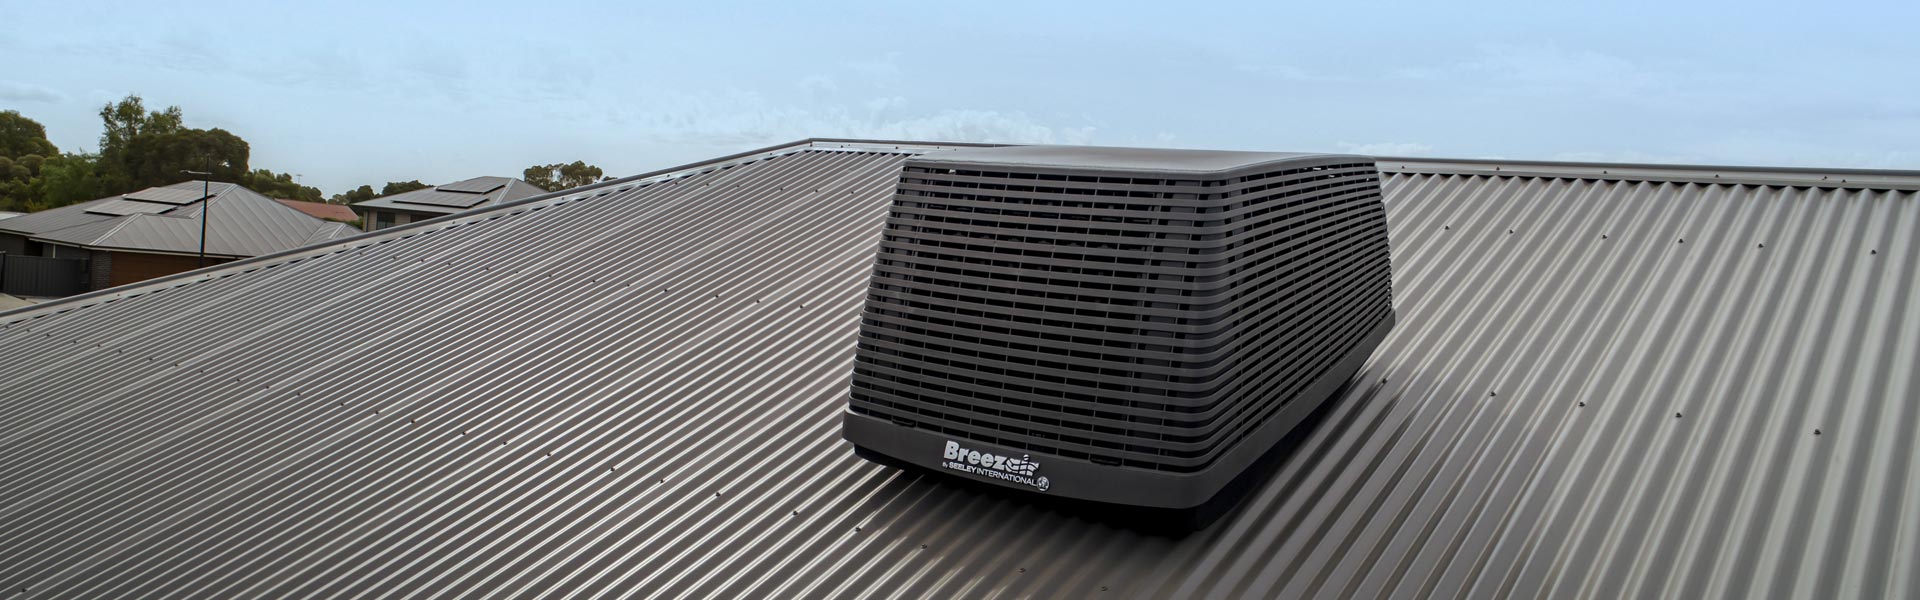 Breezair XTR evaporative cooler on rooftop